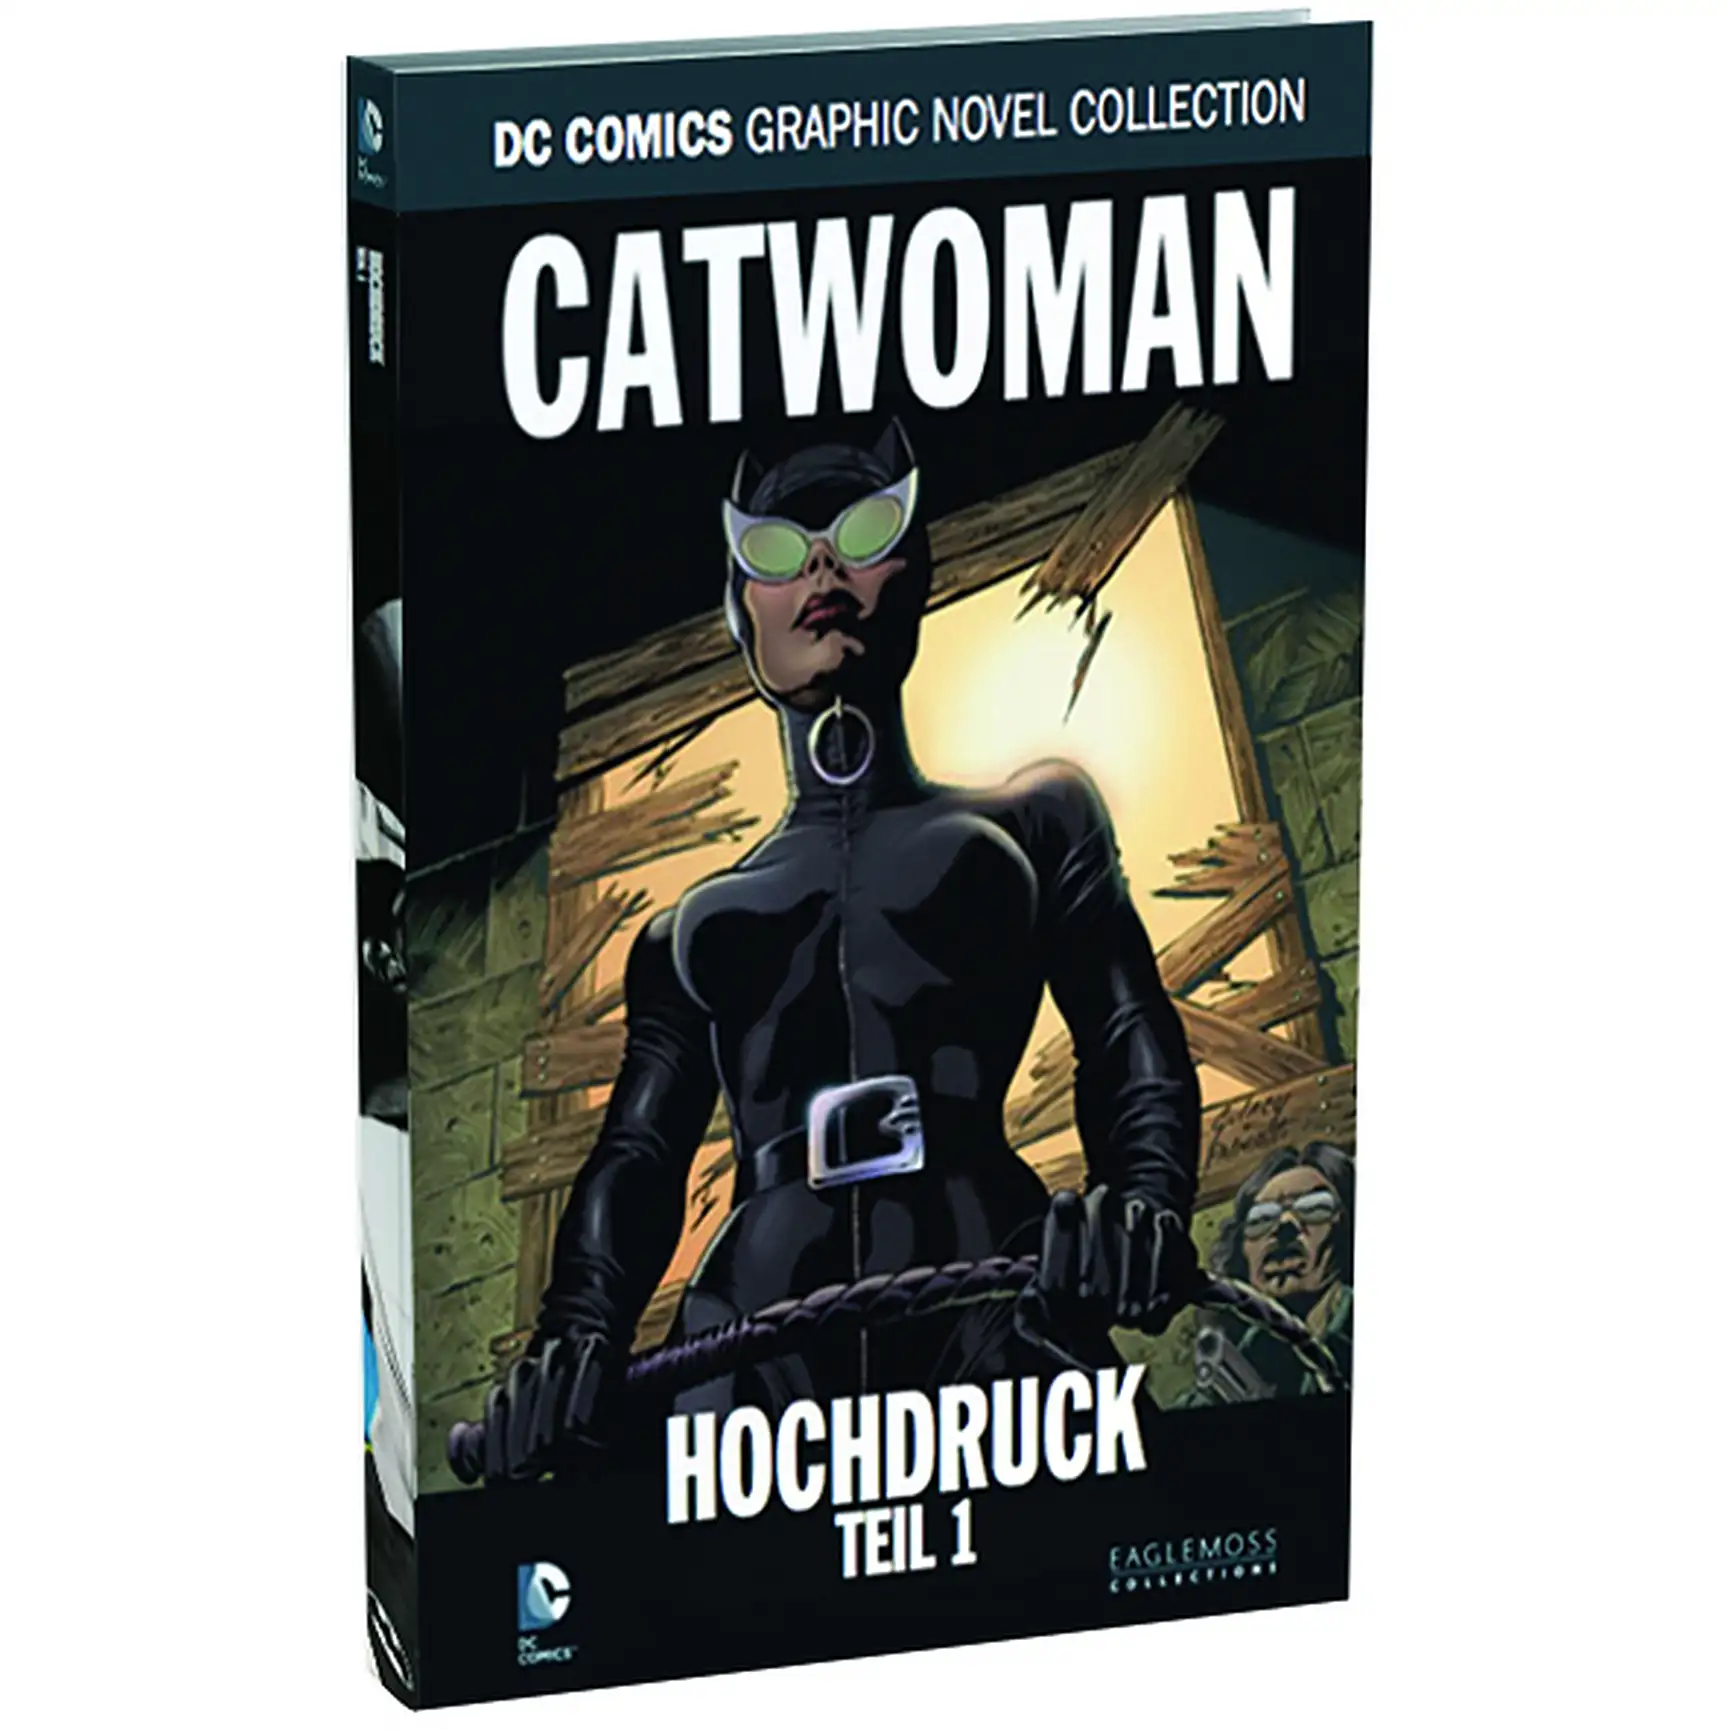 DC Comics Graphic Novel Collection Catwoman - Hochdruck Teil 1